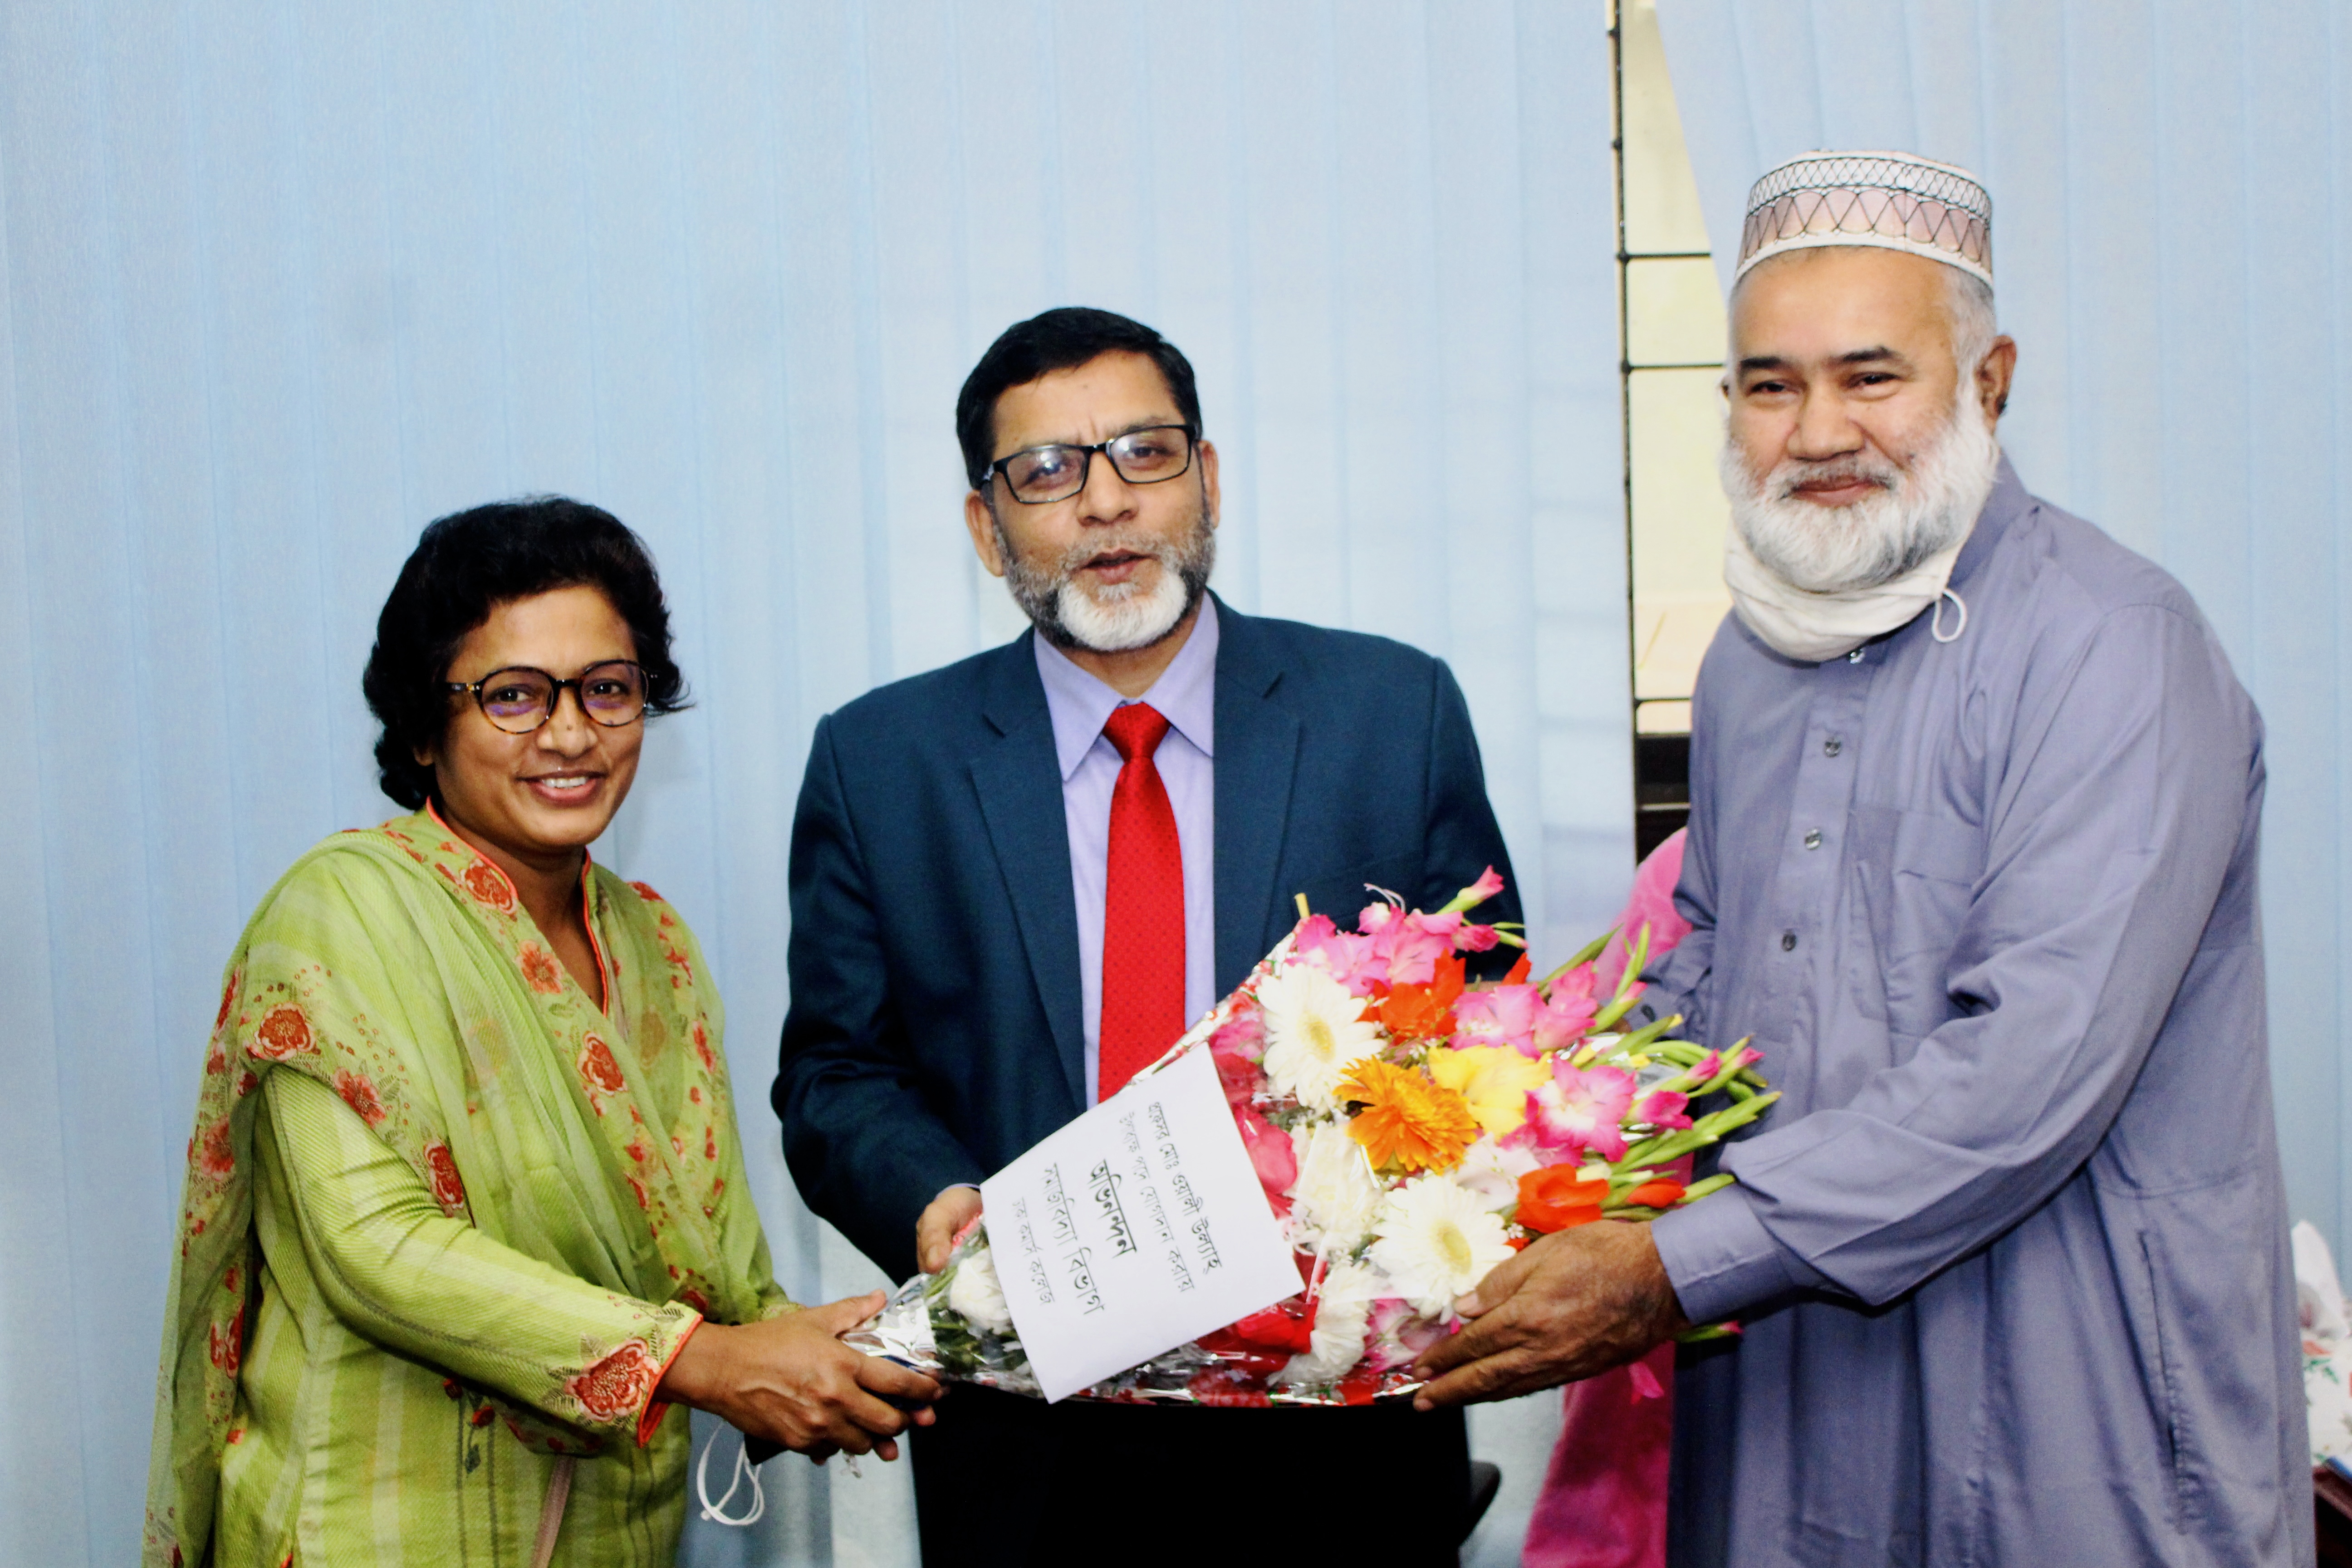 Reception to Vice Principal Prof. Md. Wali Ullah by Social Studies Department